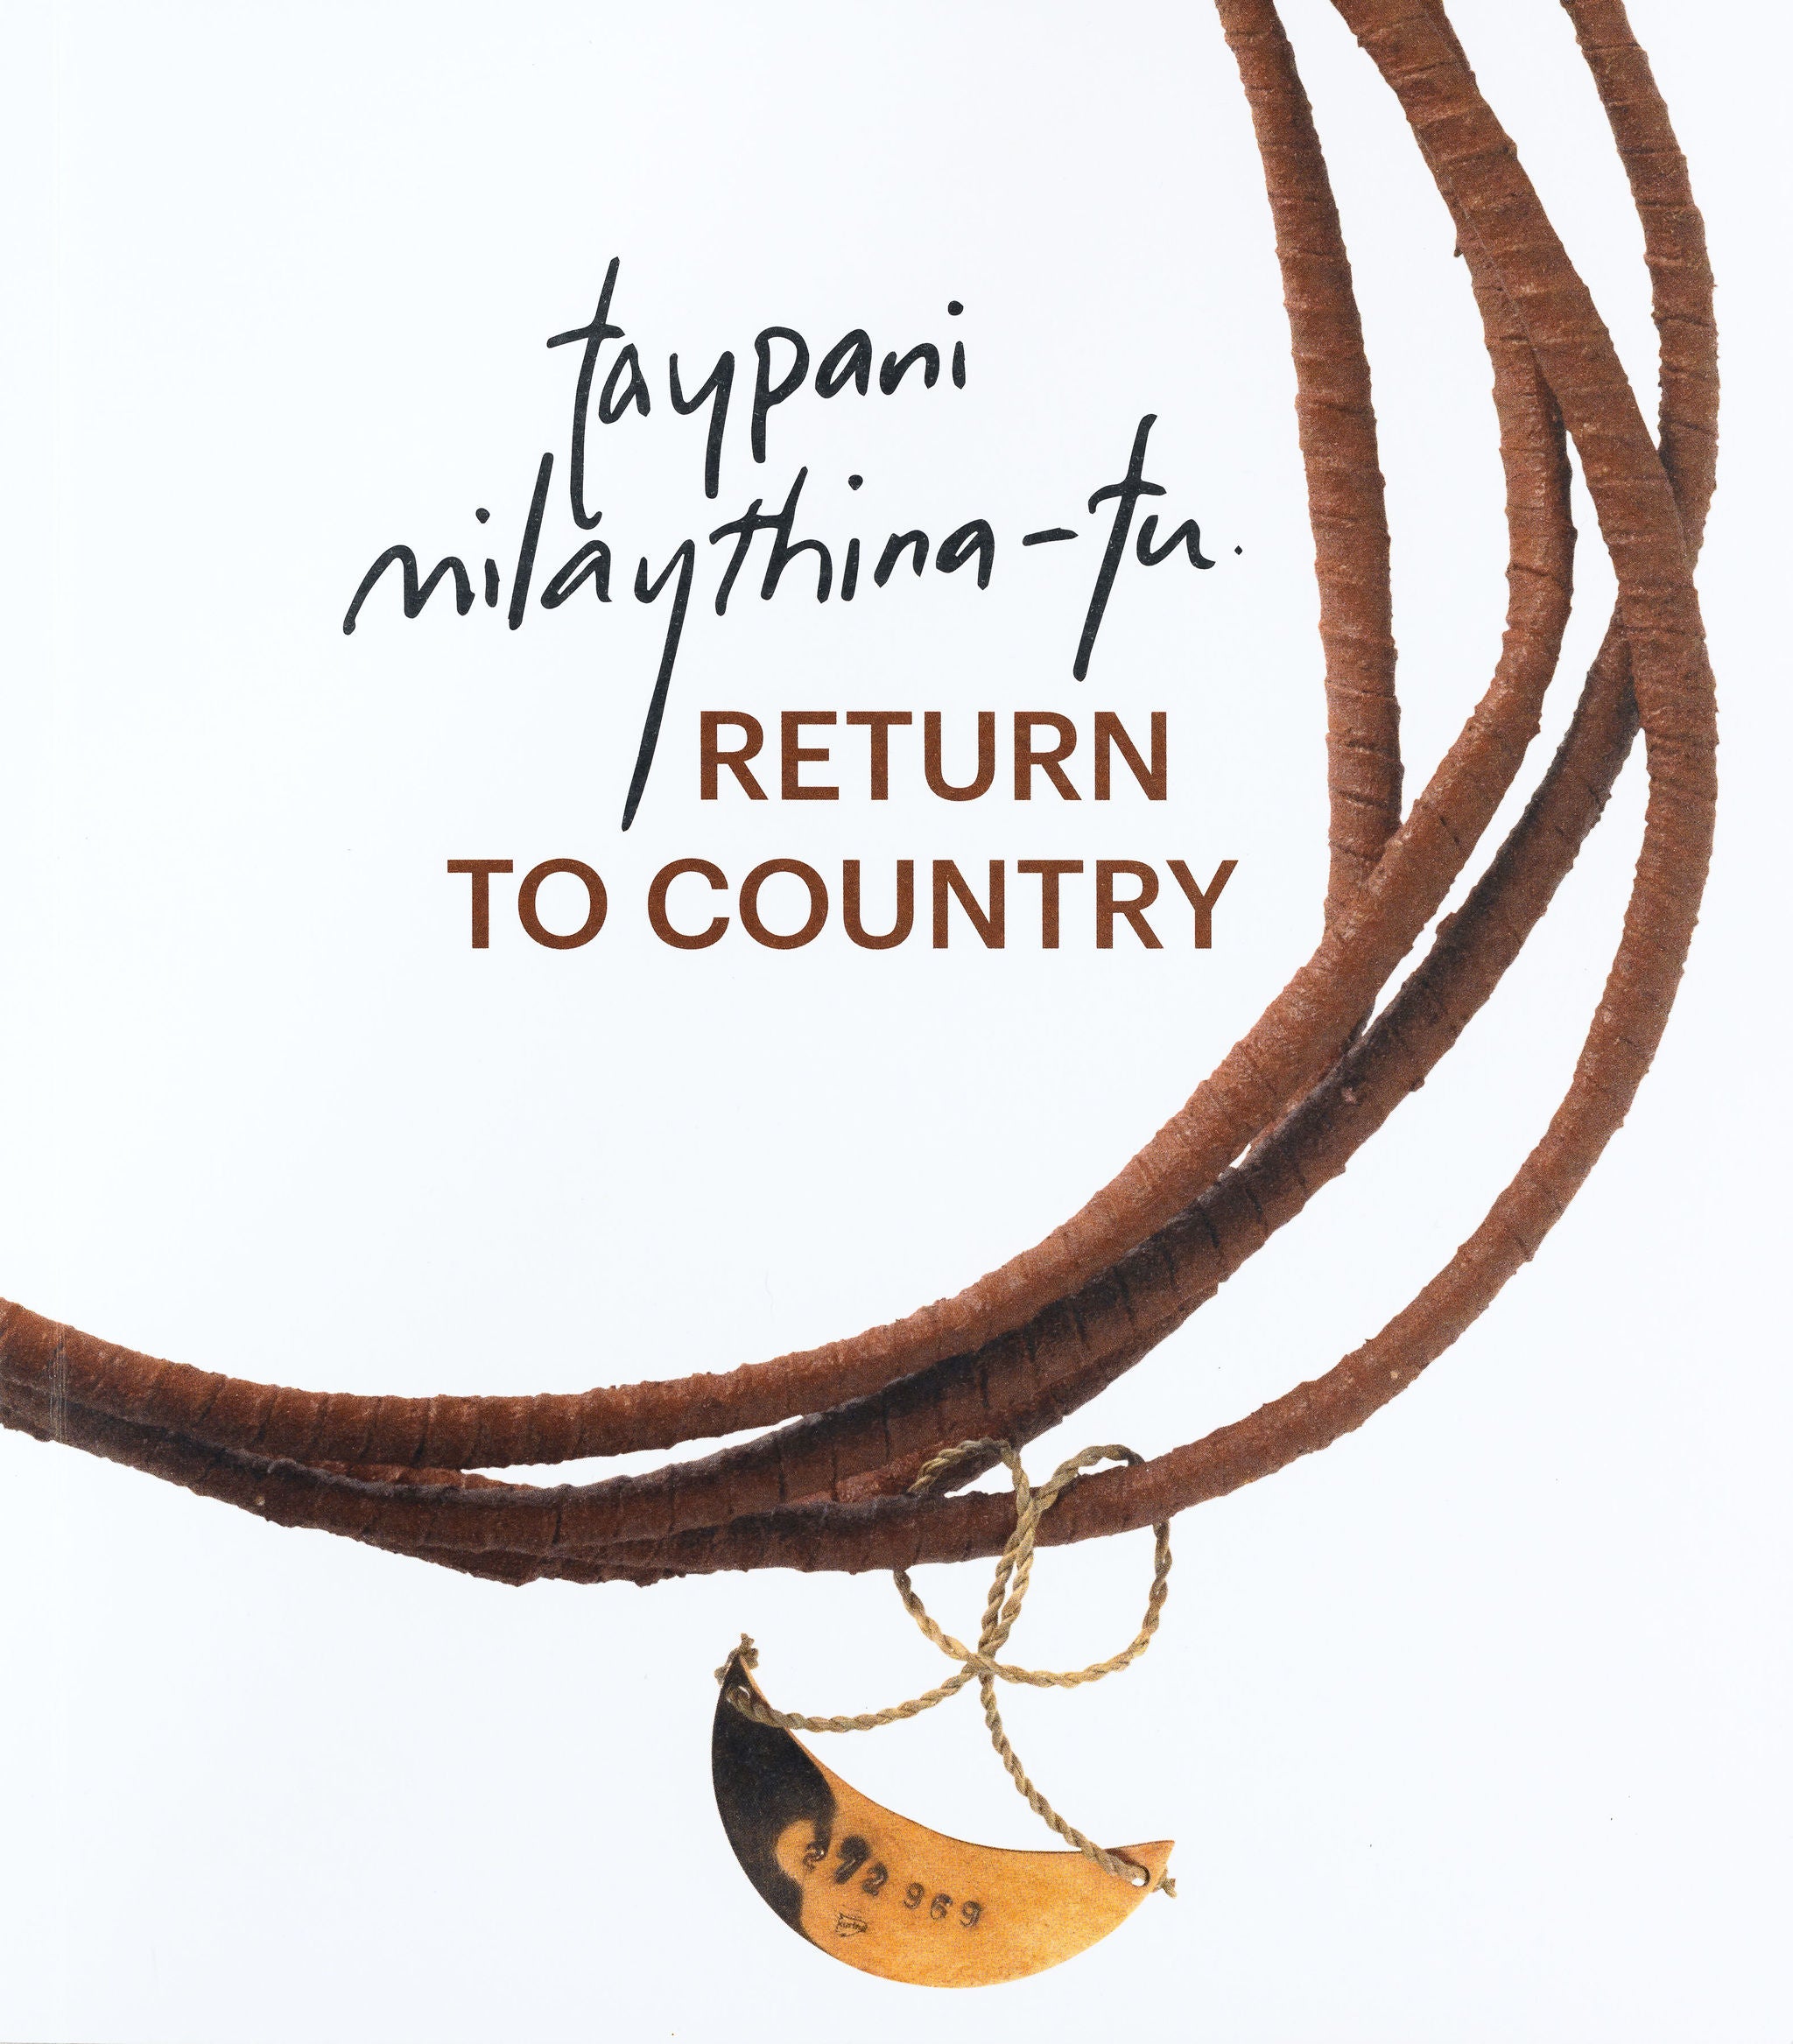 taypani milaythina-tu : Return to Country image